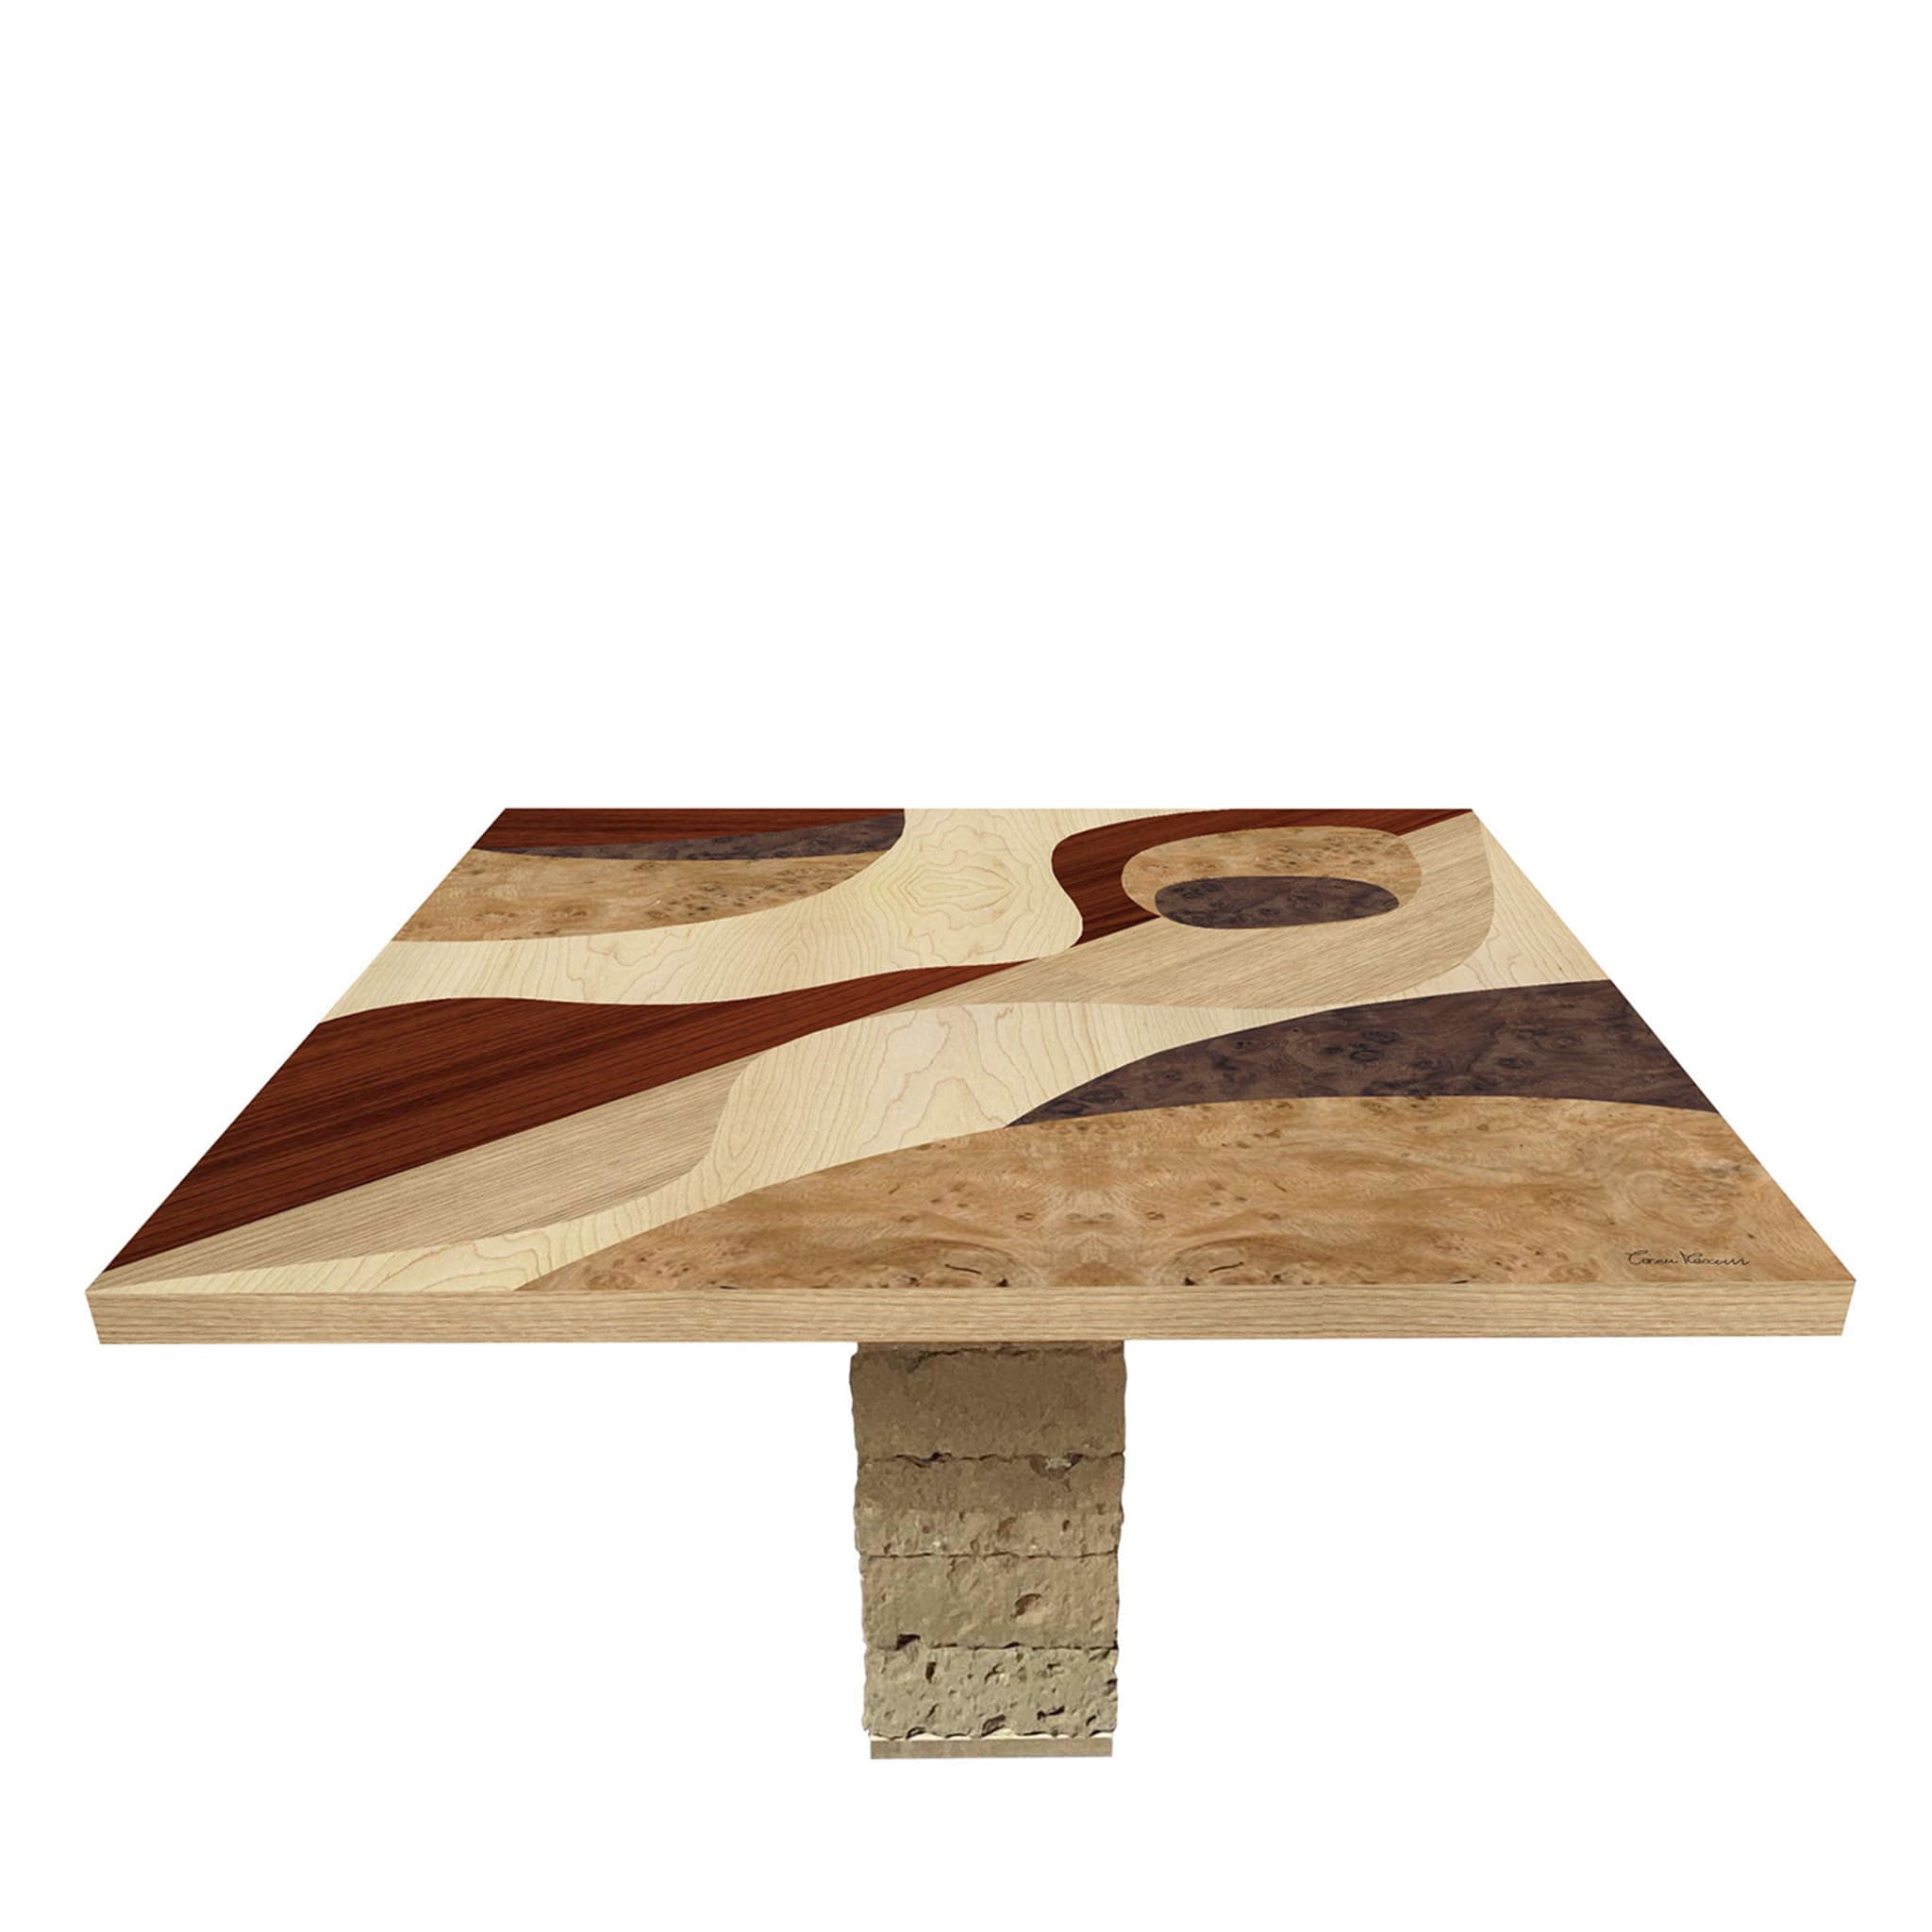 Tarsia Tables Tt4 Square Polychrome Table by Mascia Meccani - Main view